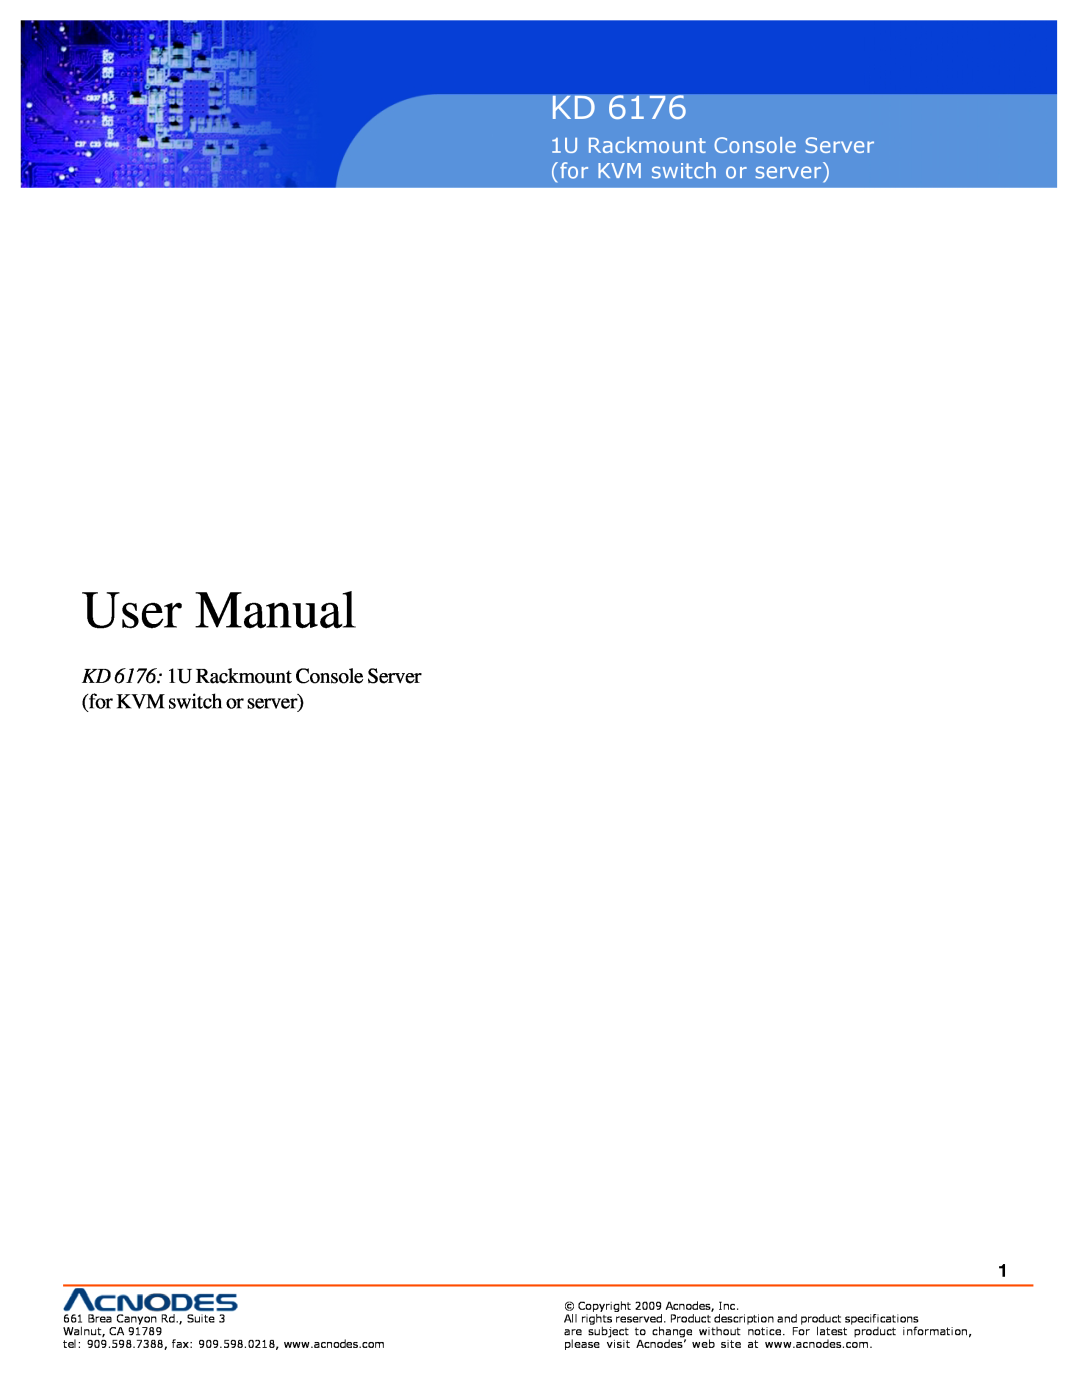 Acnodes KD 6176 user manual 1U Rackmount Console Server for KVM switch or server, User Manual, Copyright 2009 Acnodes, Inc 